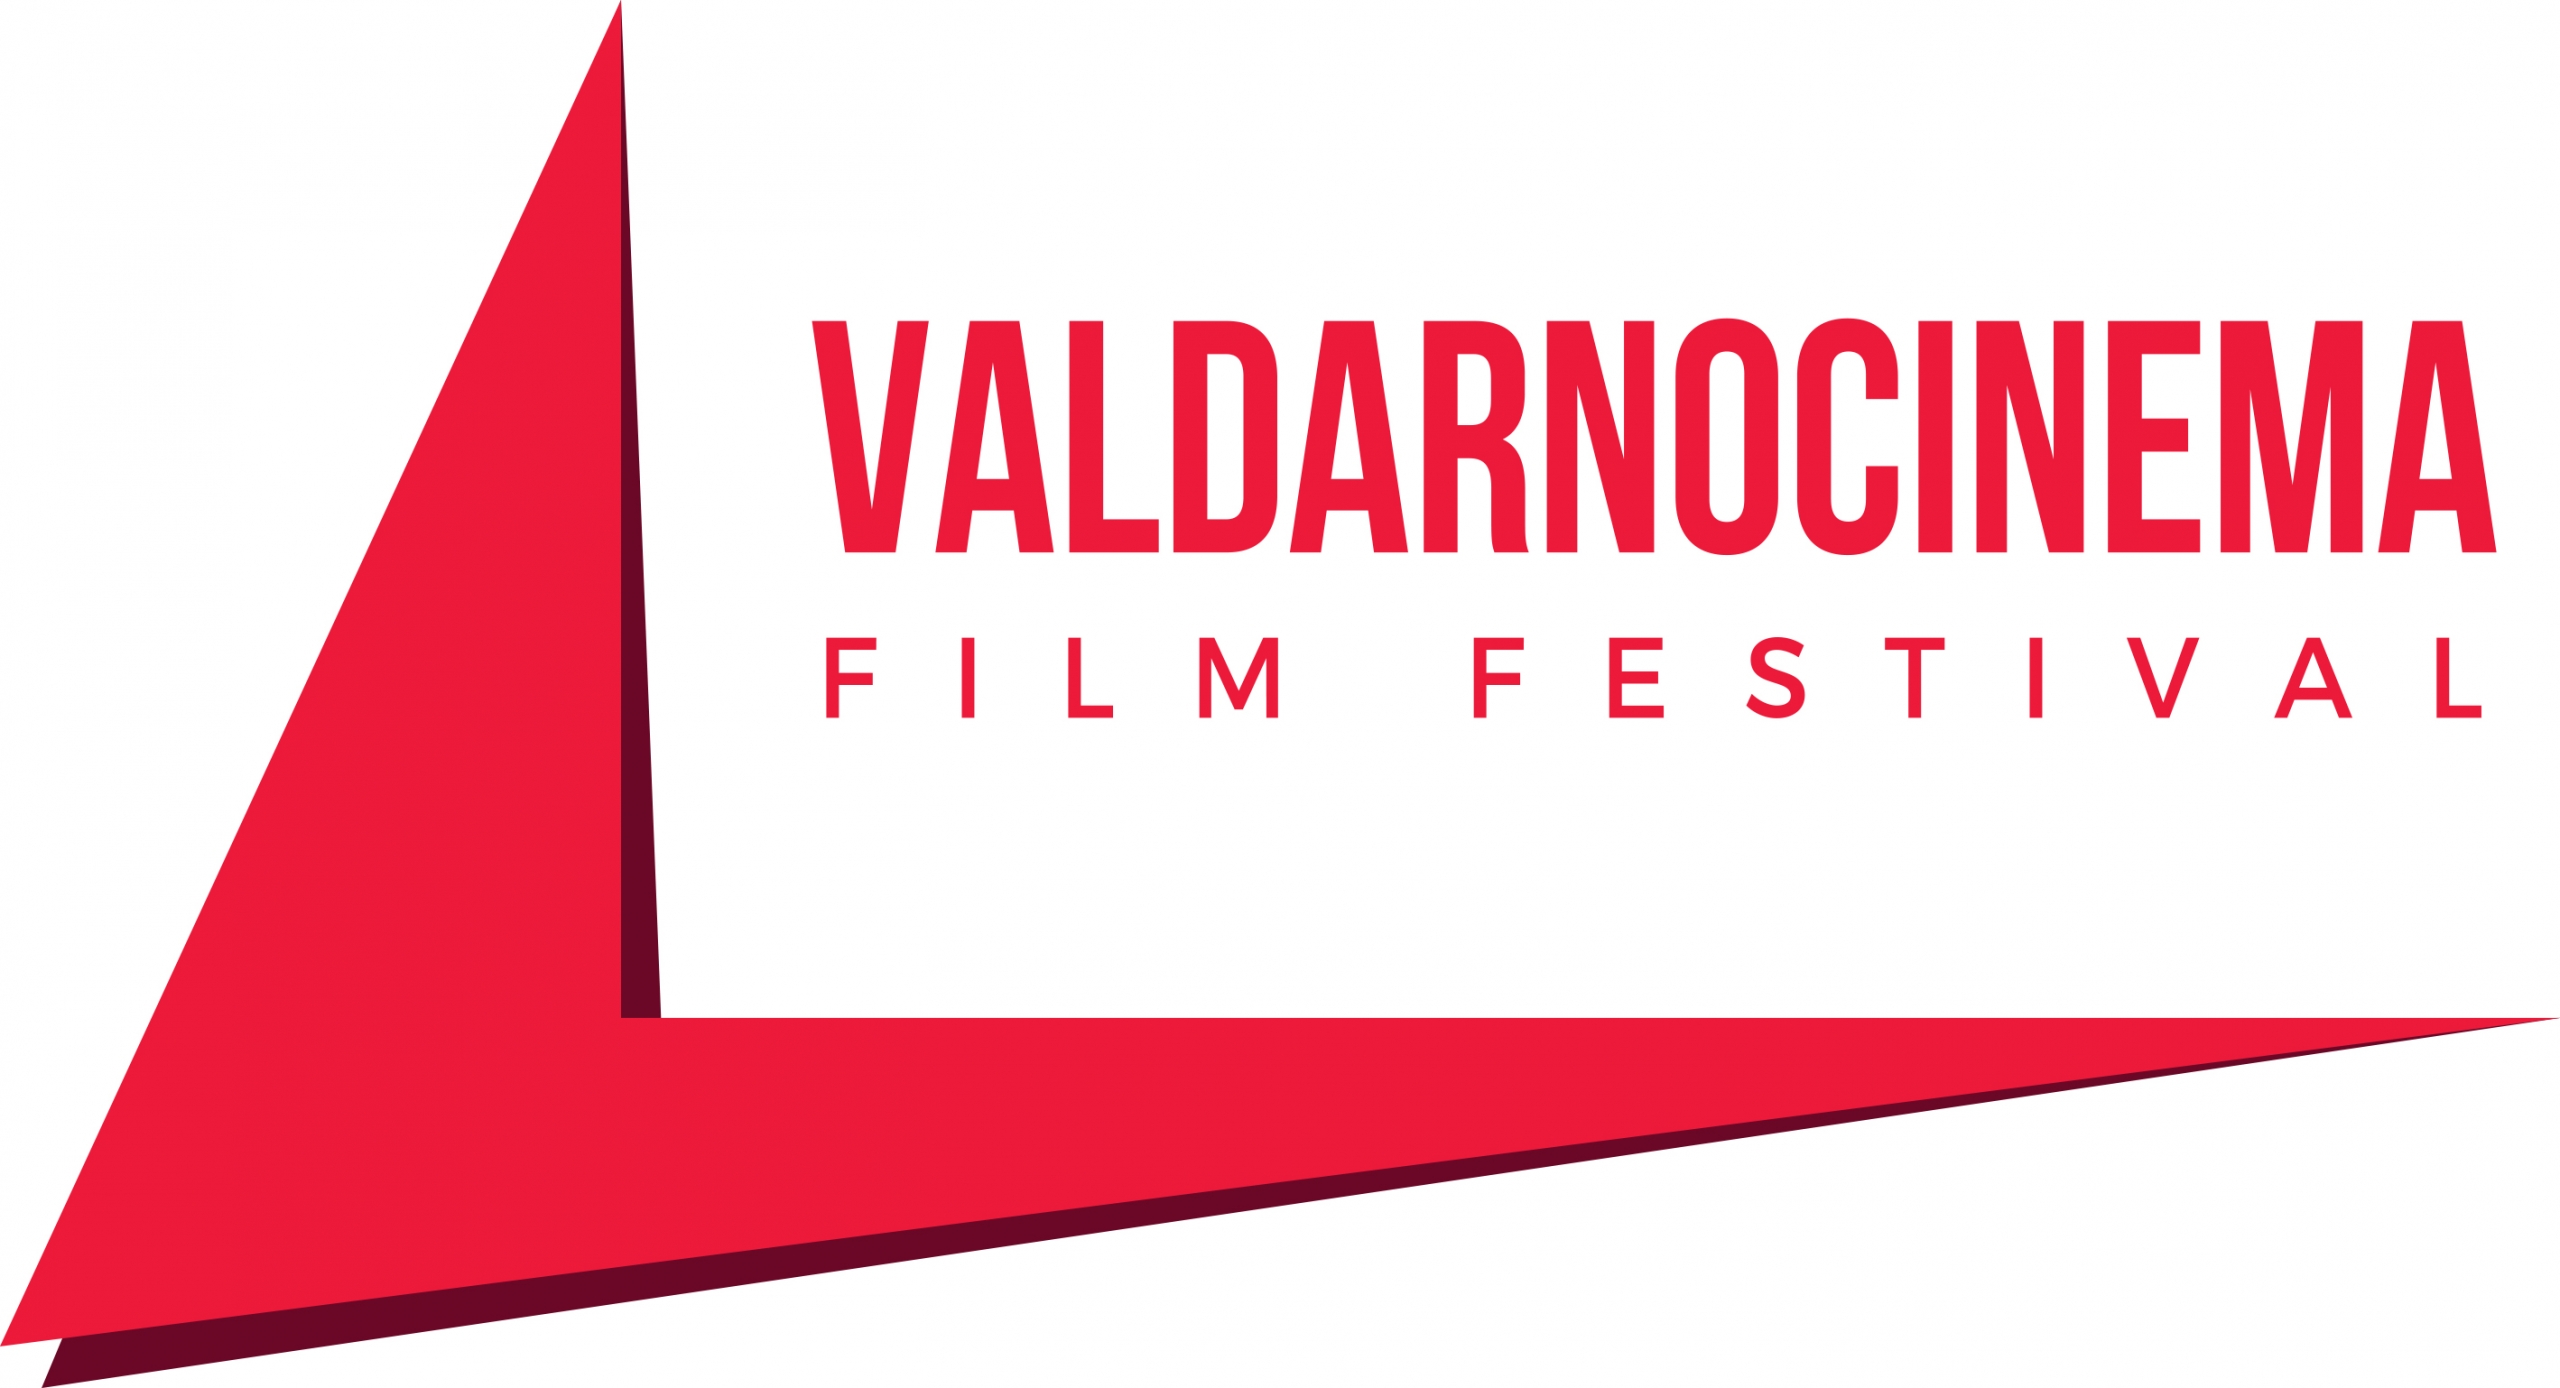 EDINBURGH SHORT FILM FESTIVAL & VALDARNOCINEMA FILM FESTIVAL 2020